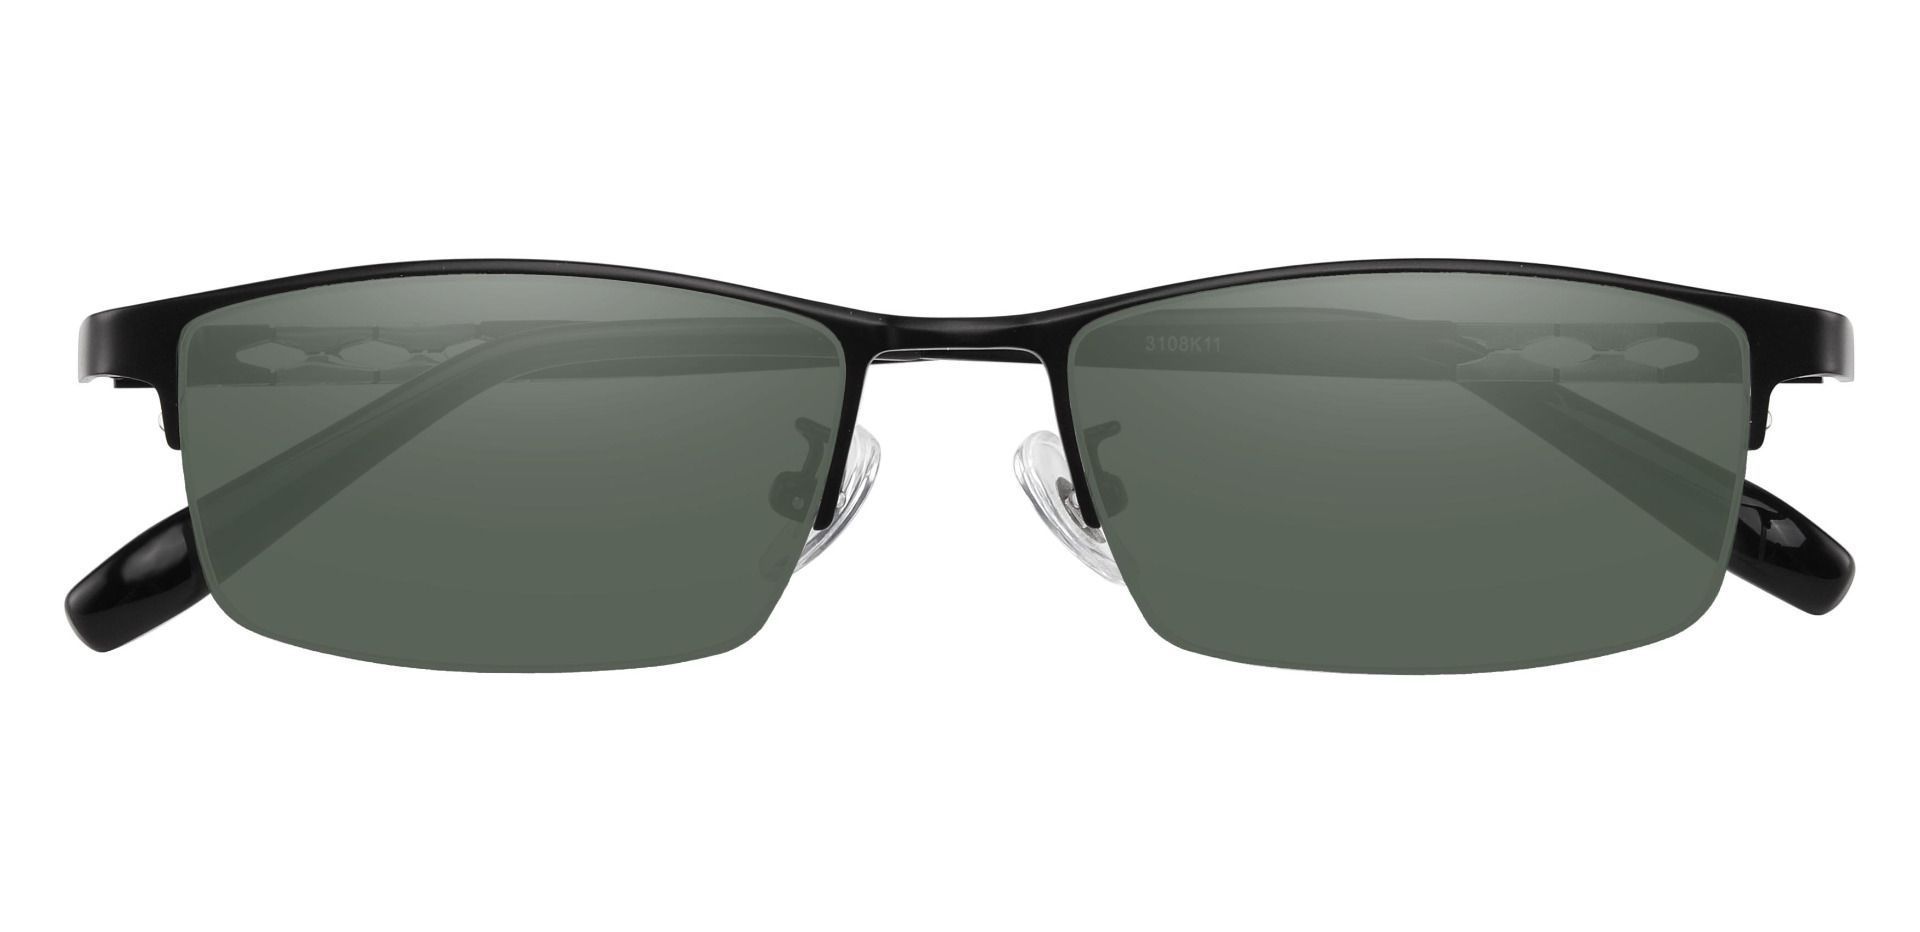 Burlington Rectangle Lined Bifocal Sunglasses - Black Frame With Green Lenses